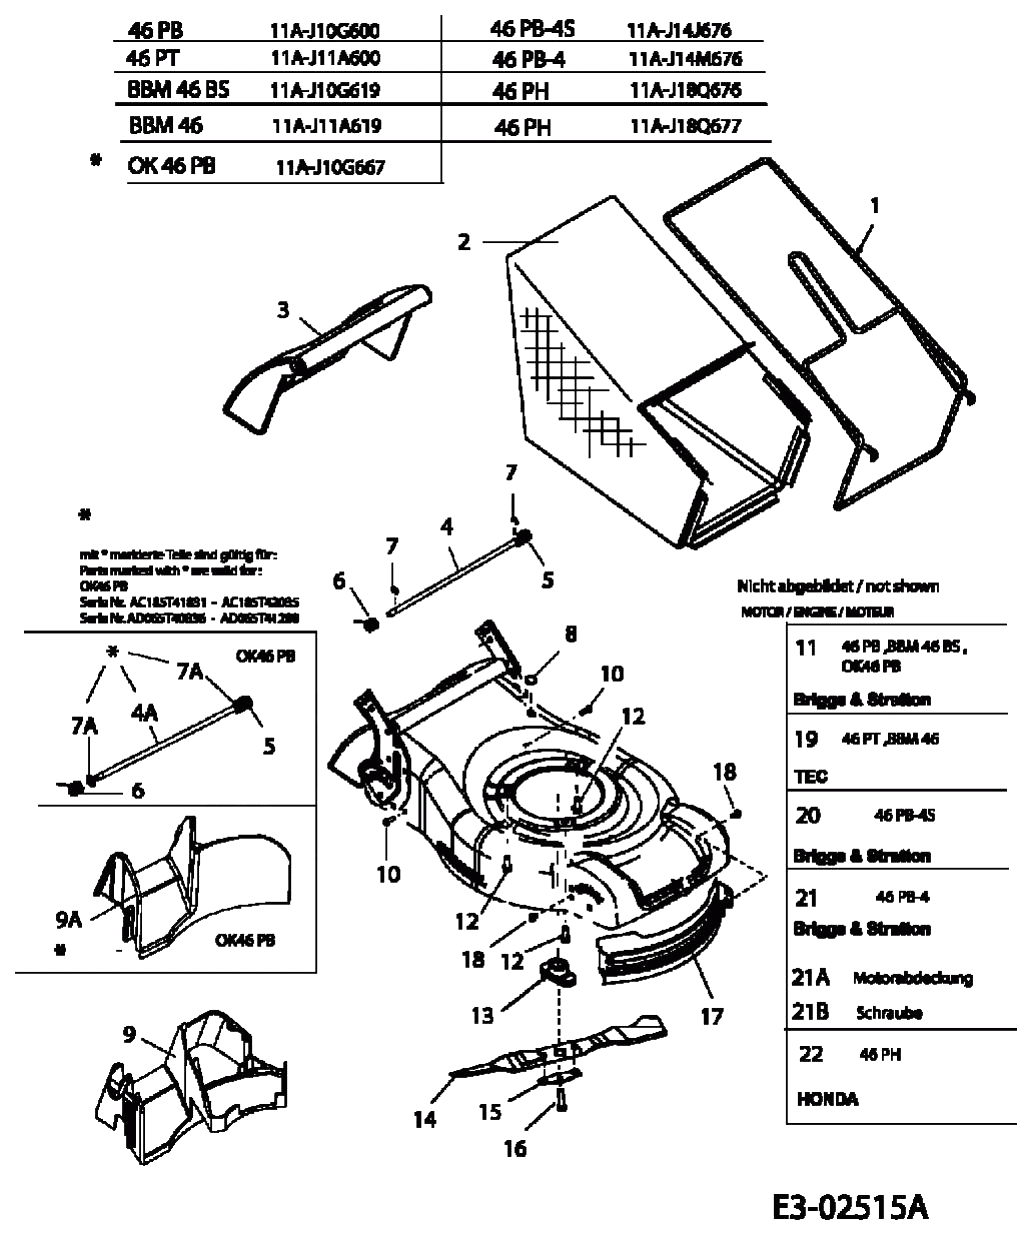 MTD Артикул 11A-J14J676 (год выпуска 2005). Травосборник, ножи, двигатель